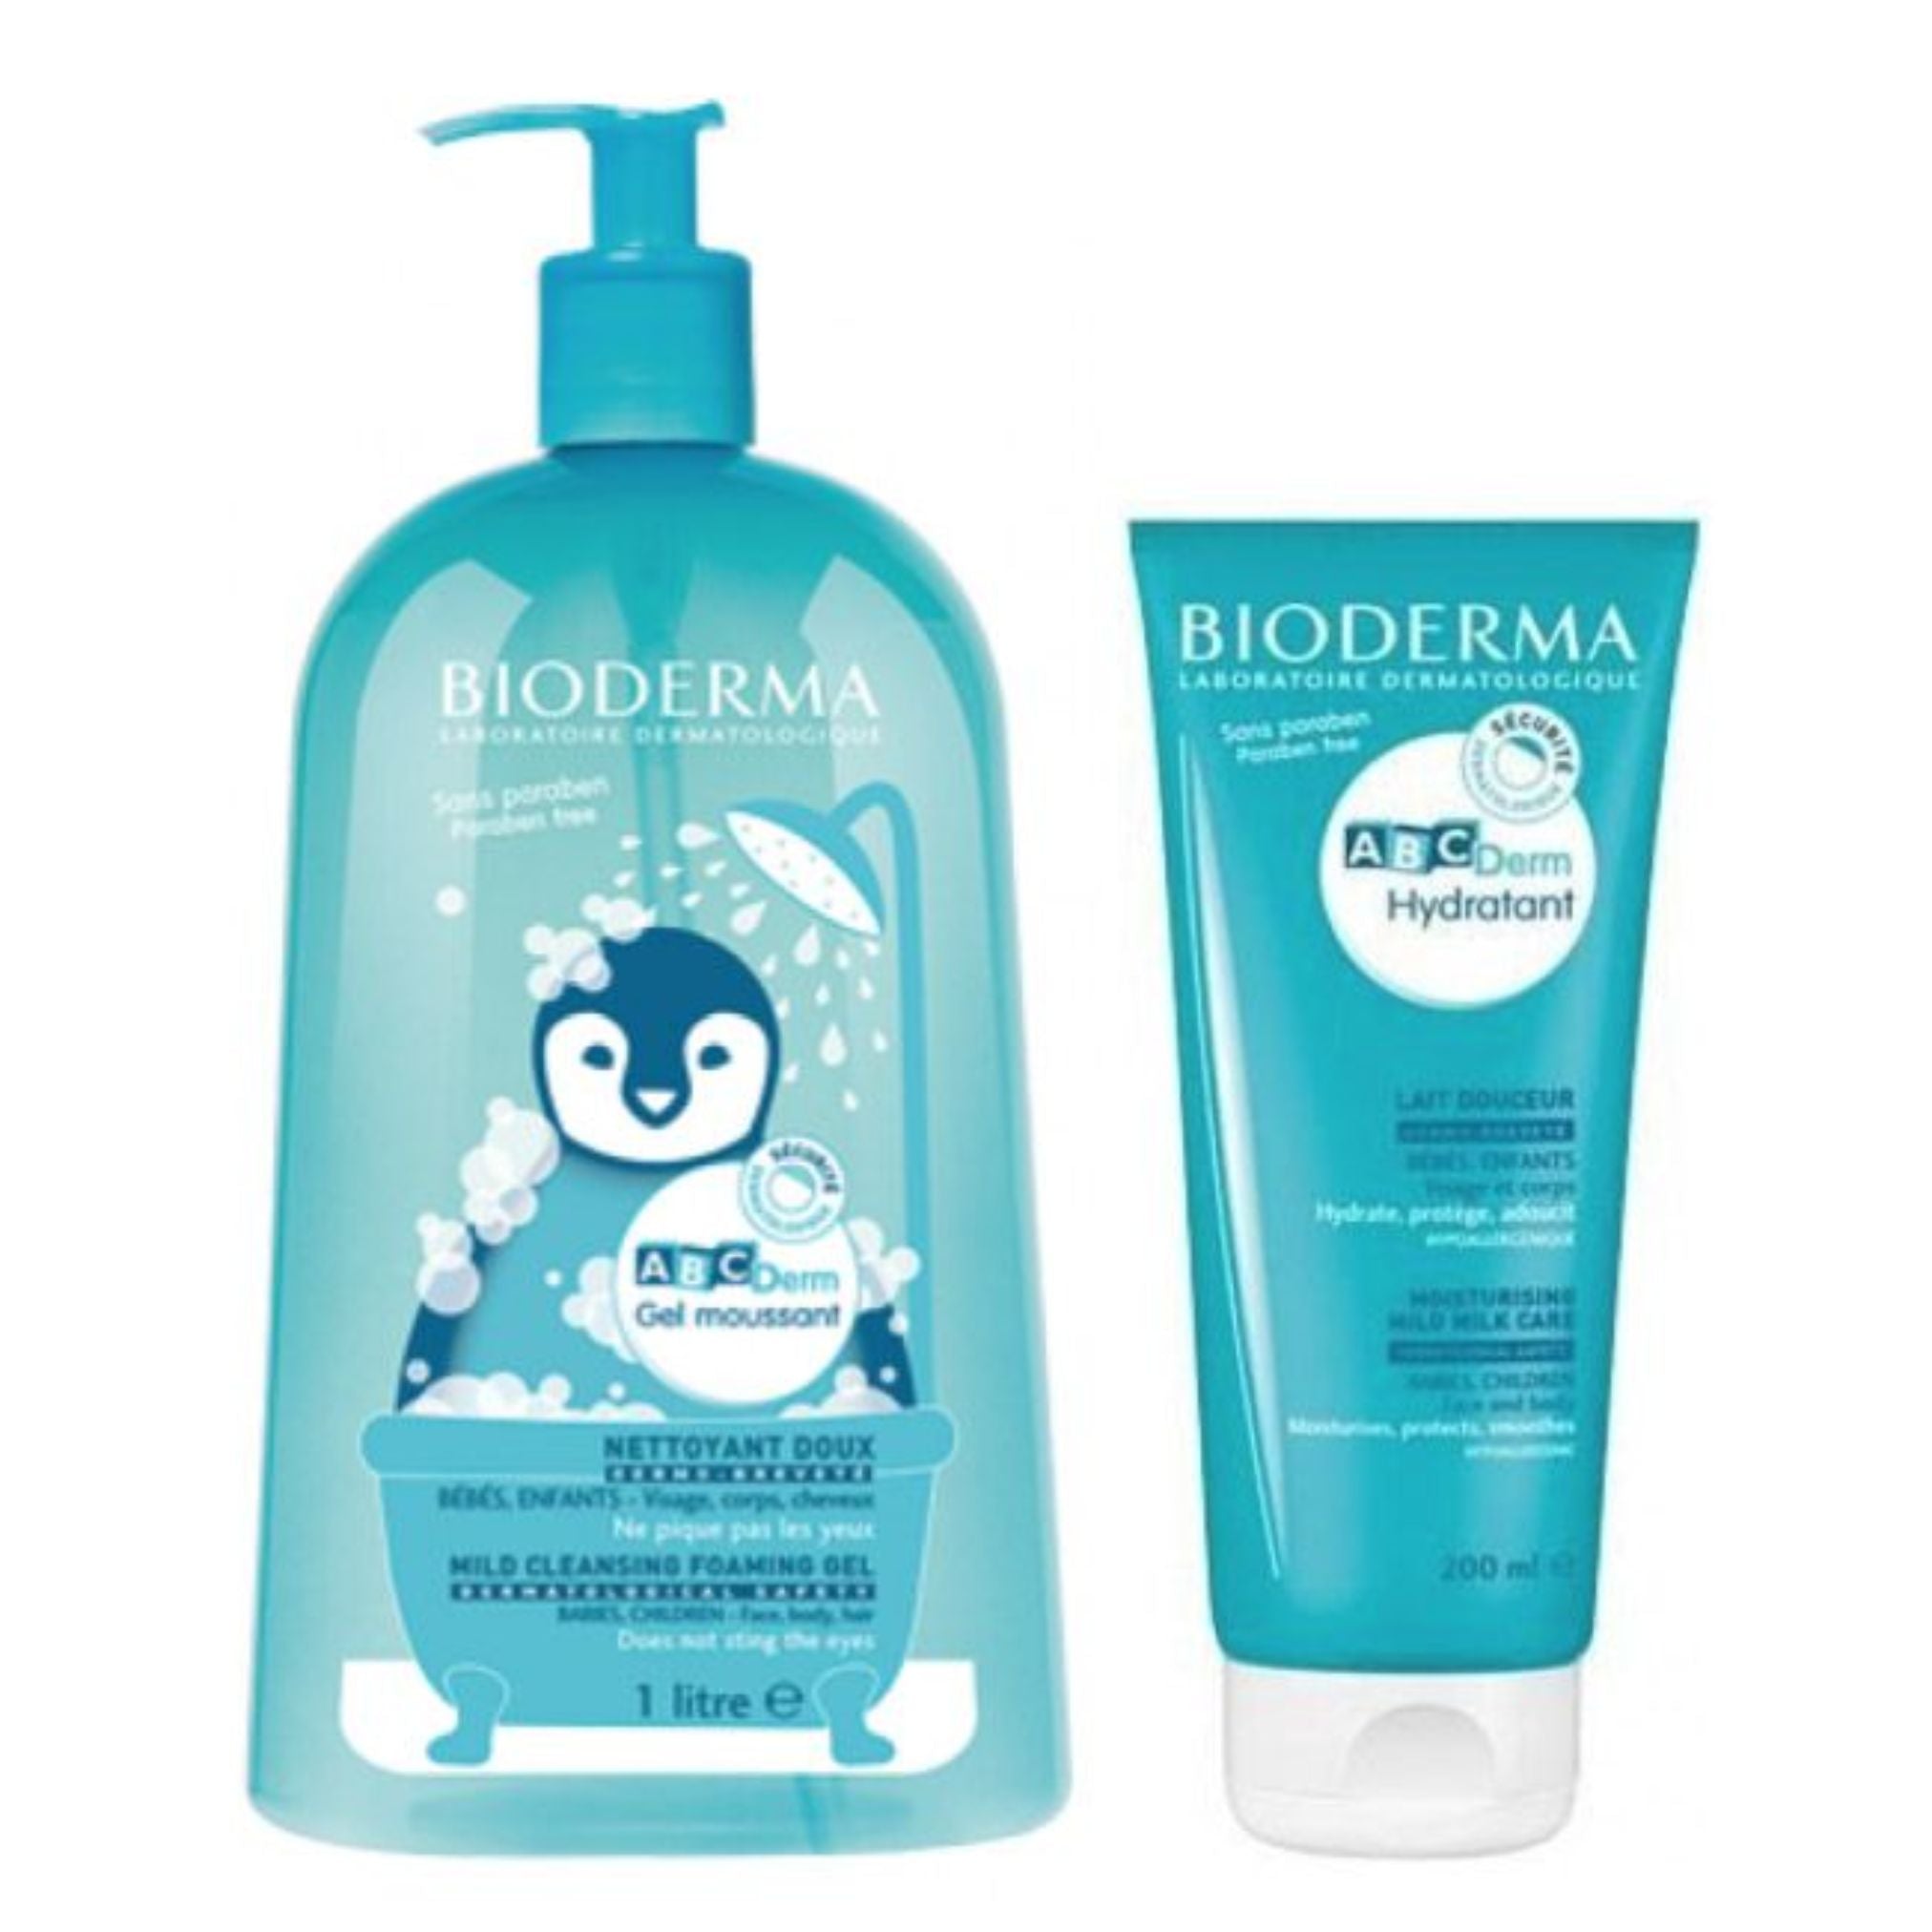 Bioderma Promo Pack: Bioderma ACBDerm Gel Moussant 1L + Bioderma ABCDerm Moisturising Mild Milk Care 200ml